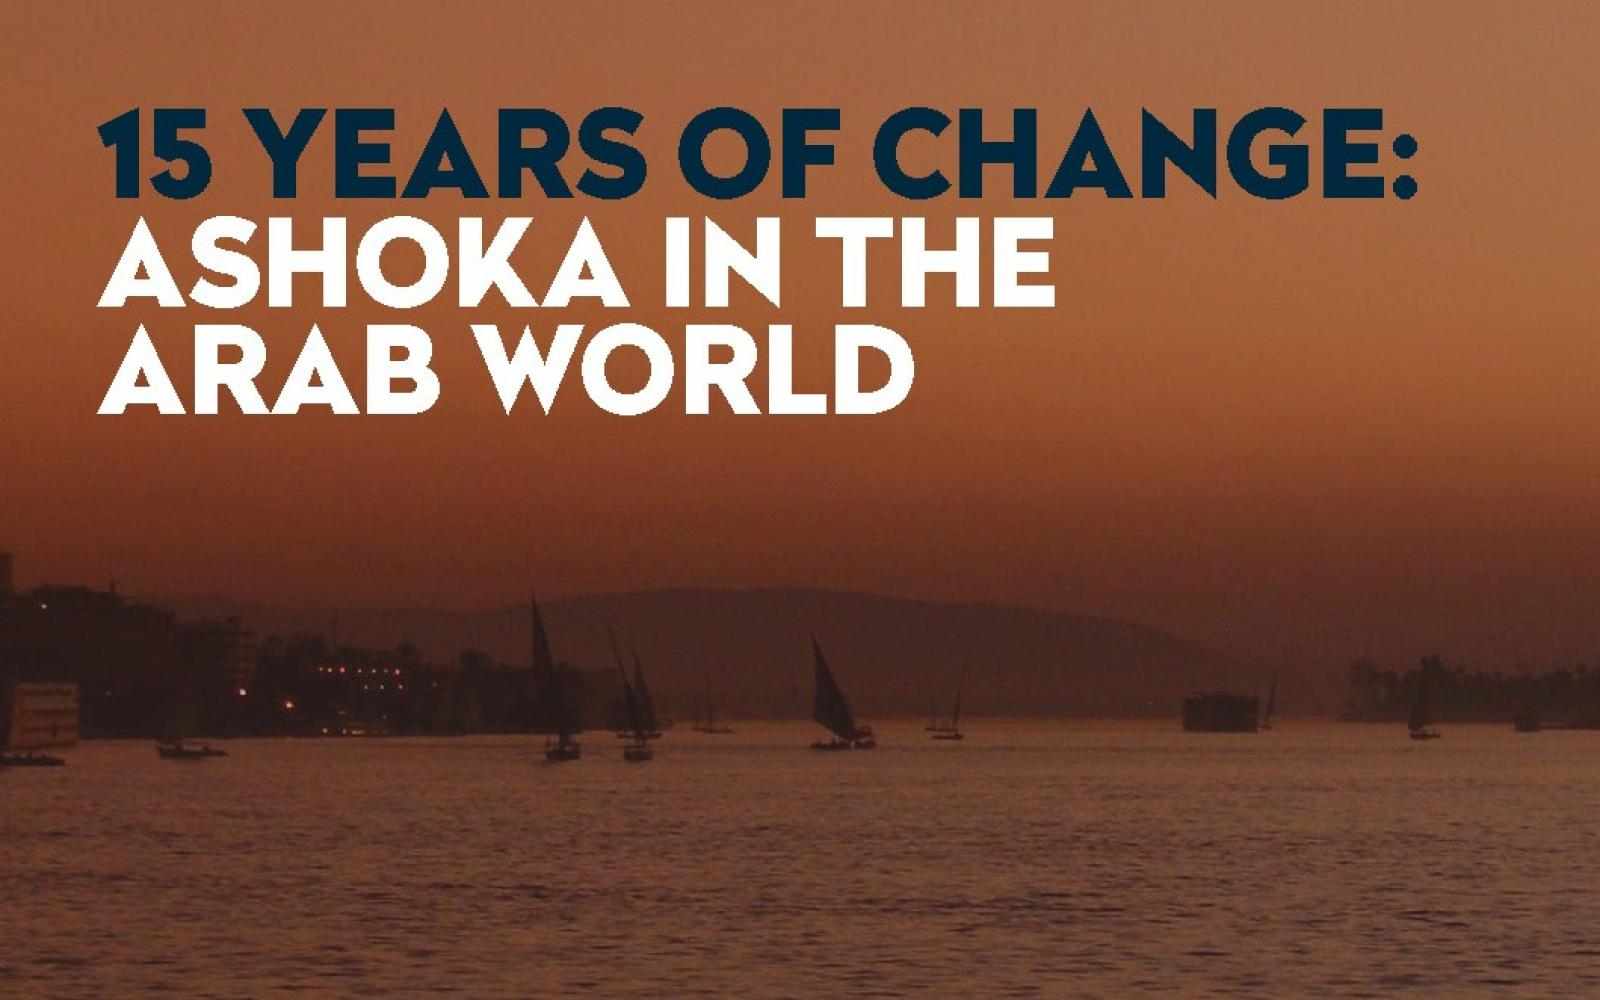 15 Years of Change - Ashoka in the Arab World